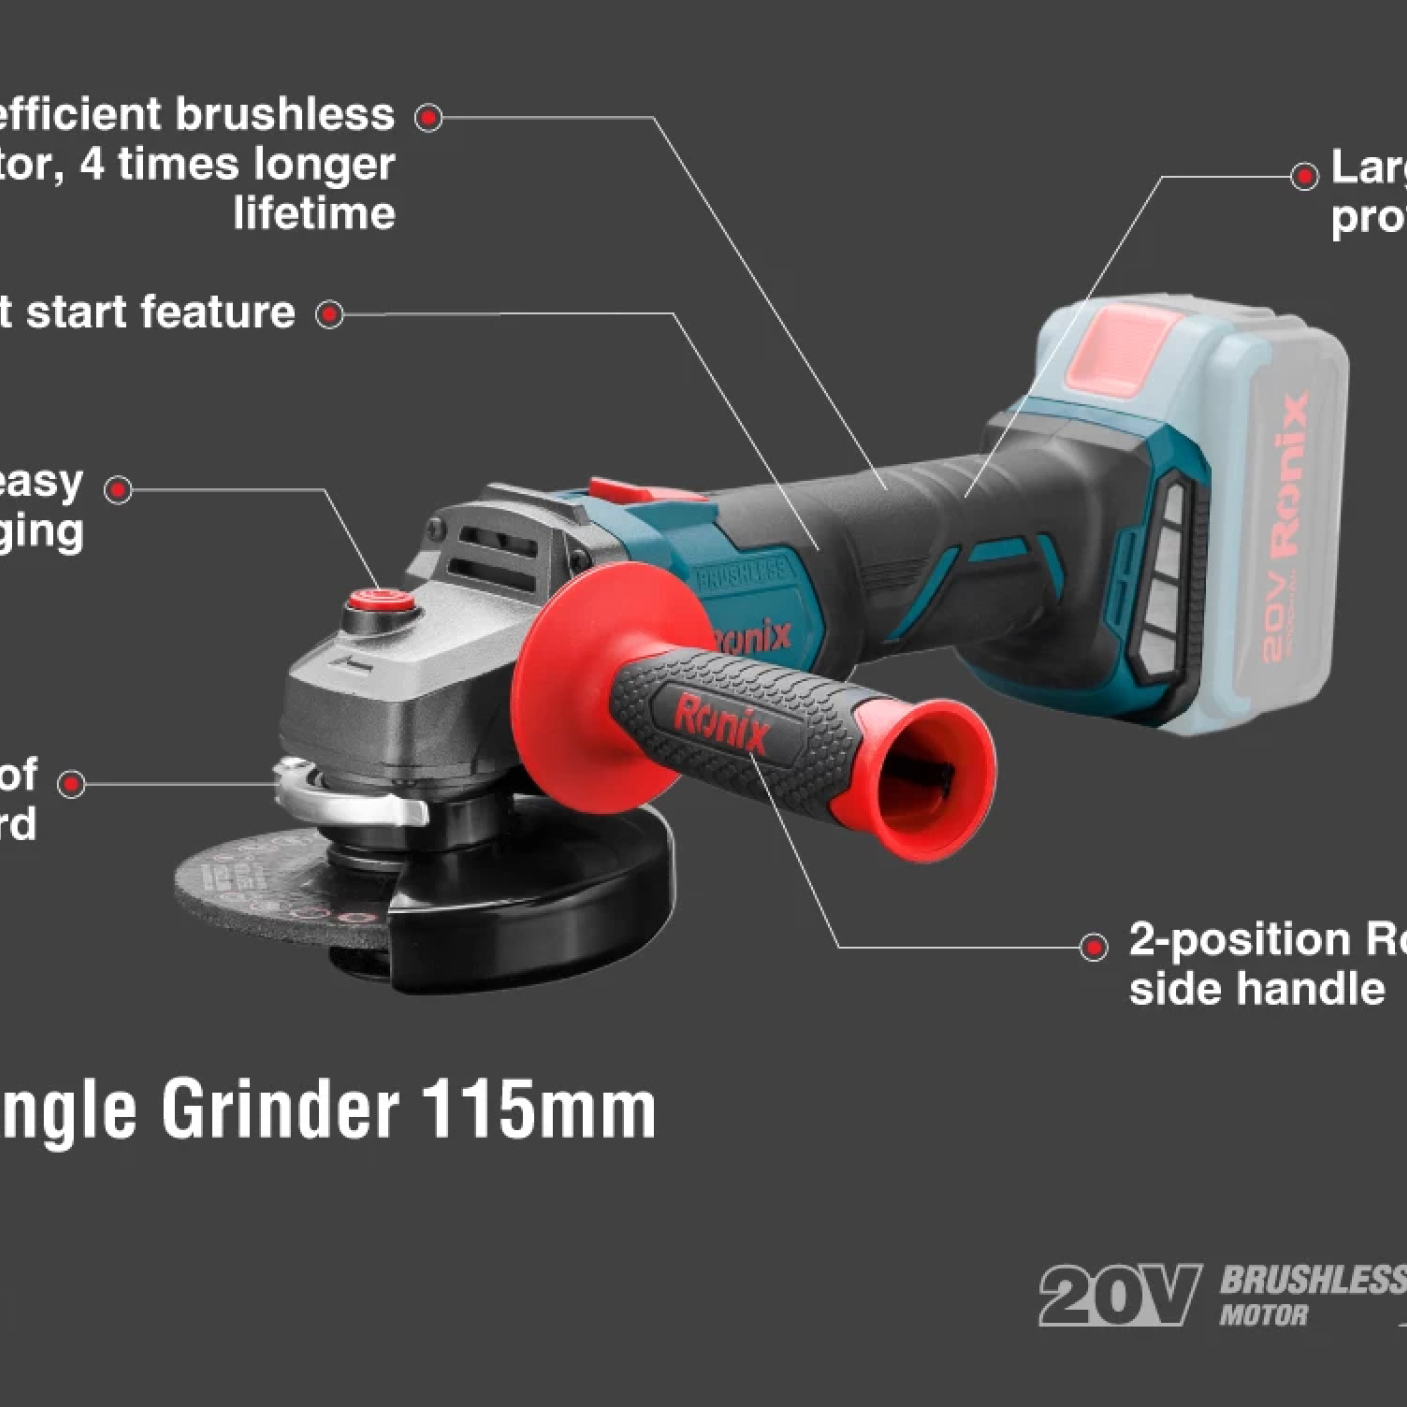 Cordless, mini angle grinder, 20V, 115mm, Brushless Series, no battery, RONIX